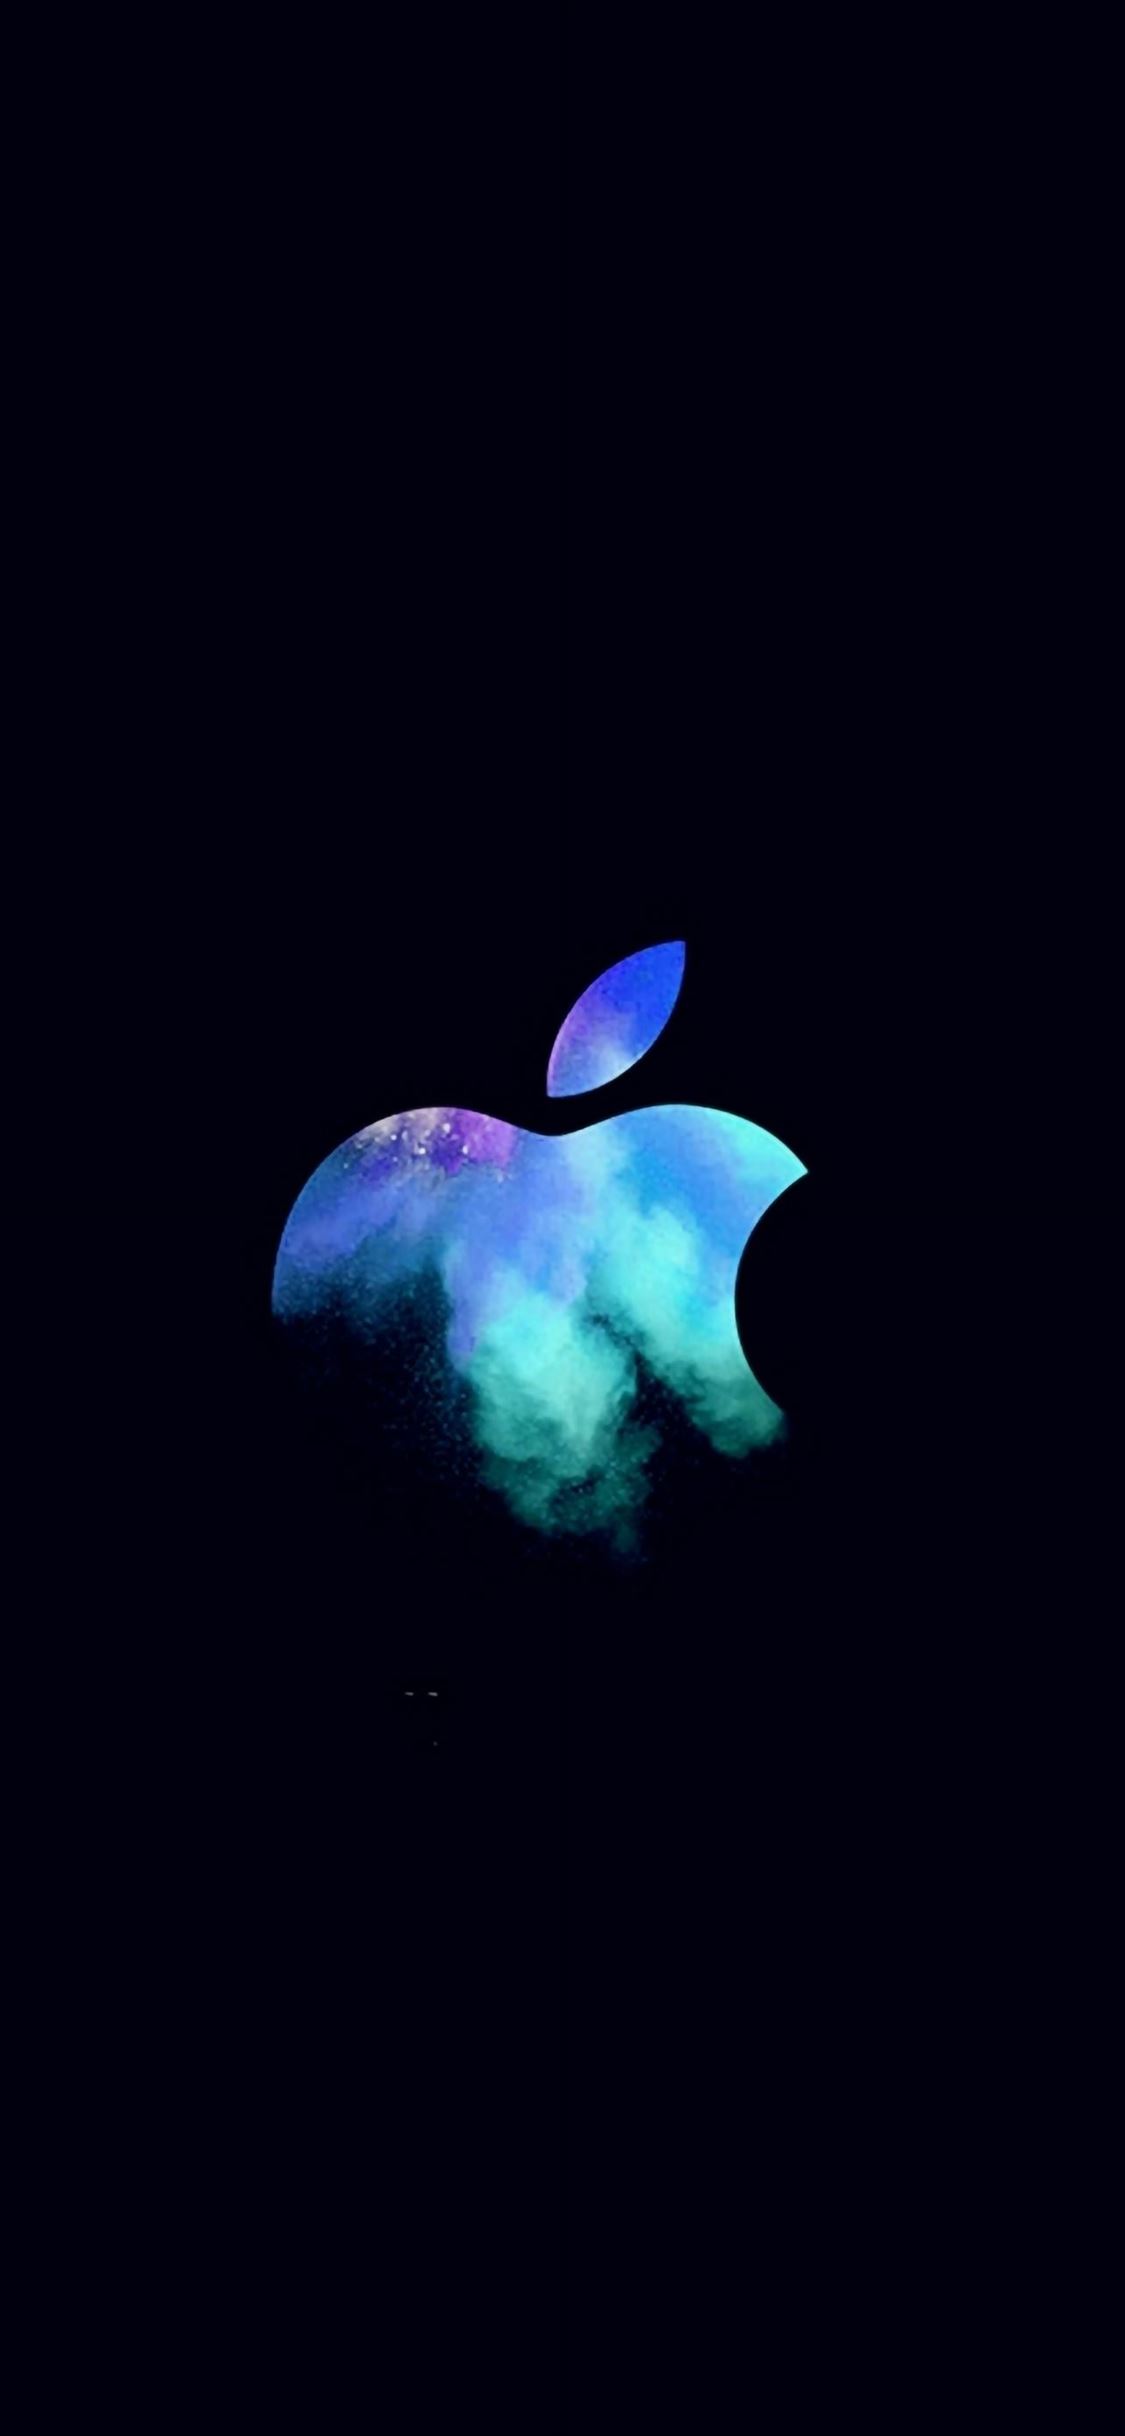 Apple Mac Event Logo Dark Illustration Art Blue iPhone wallpaper 